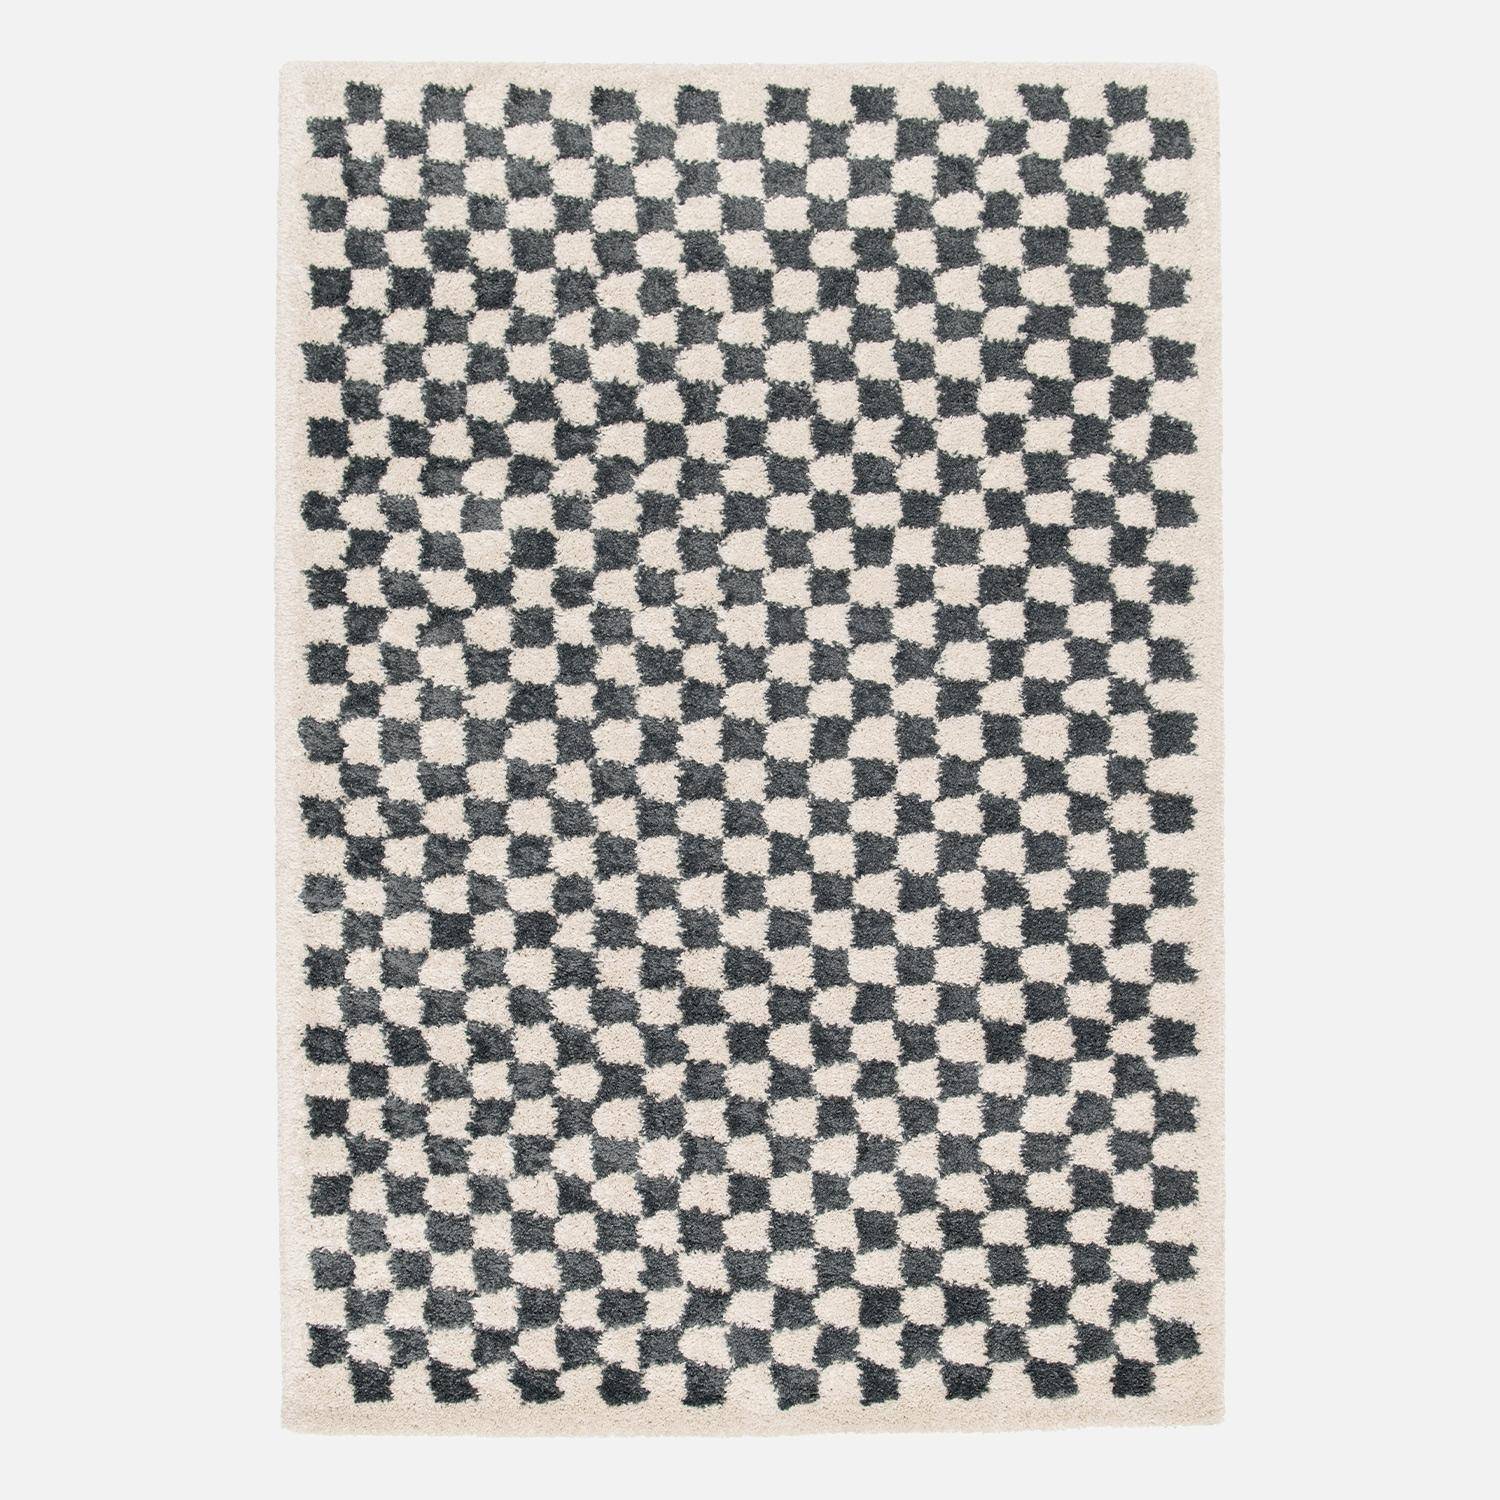 Dark blue and cream shaggy checkerboard interior carpet, Taylor, 160 x 230 cm Photo1